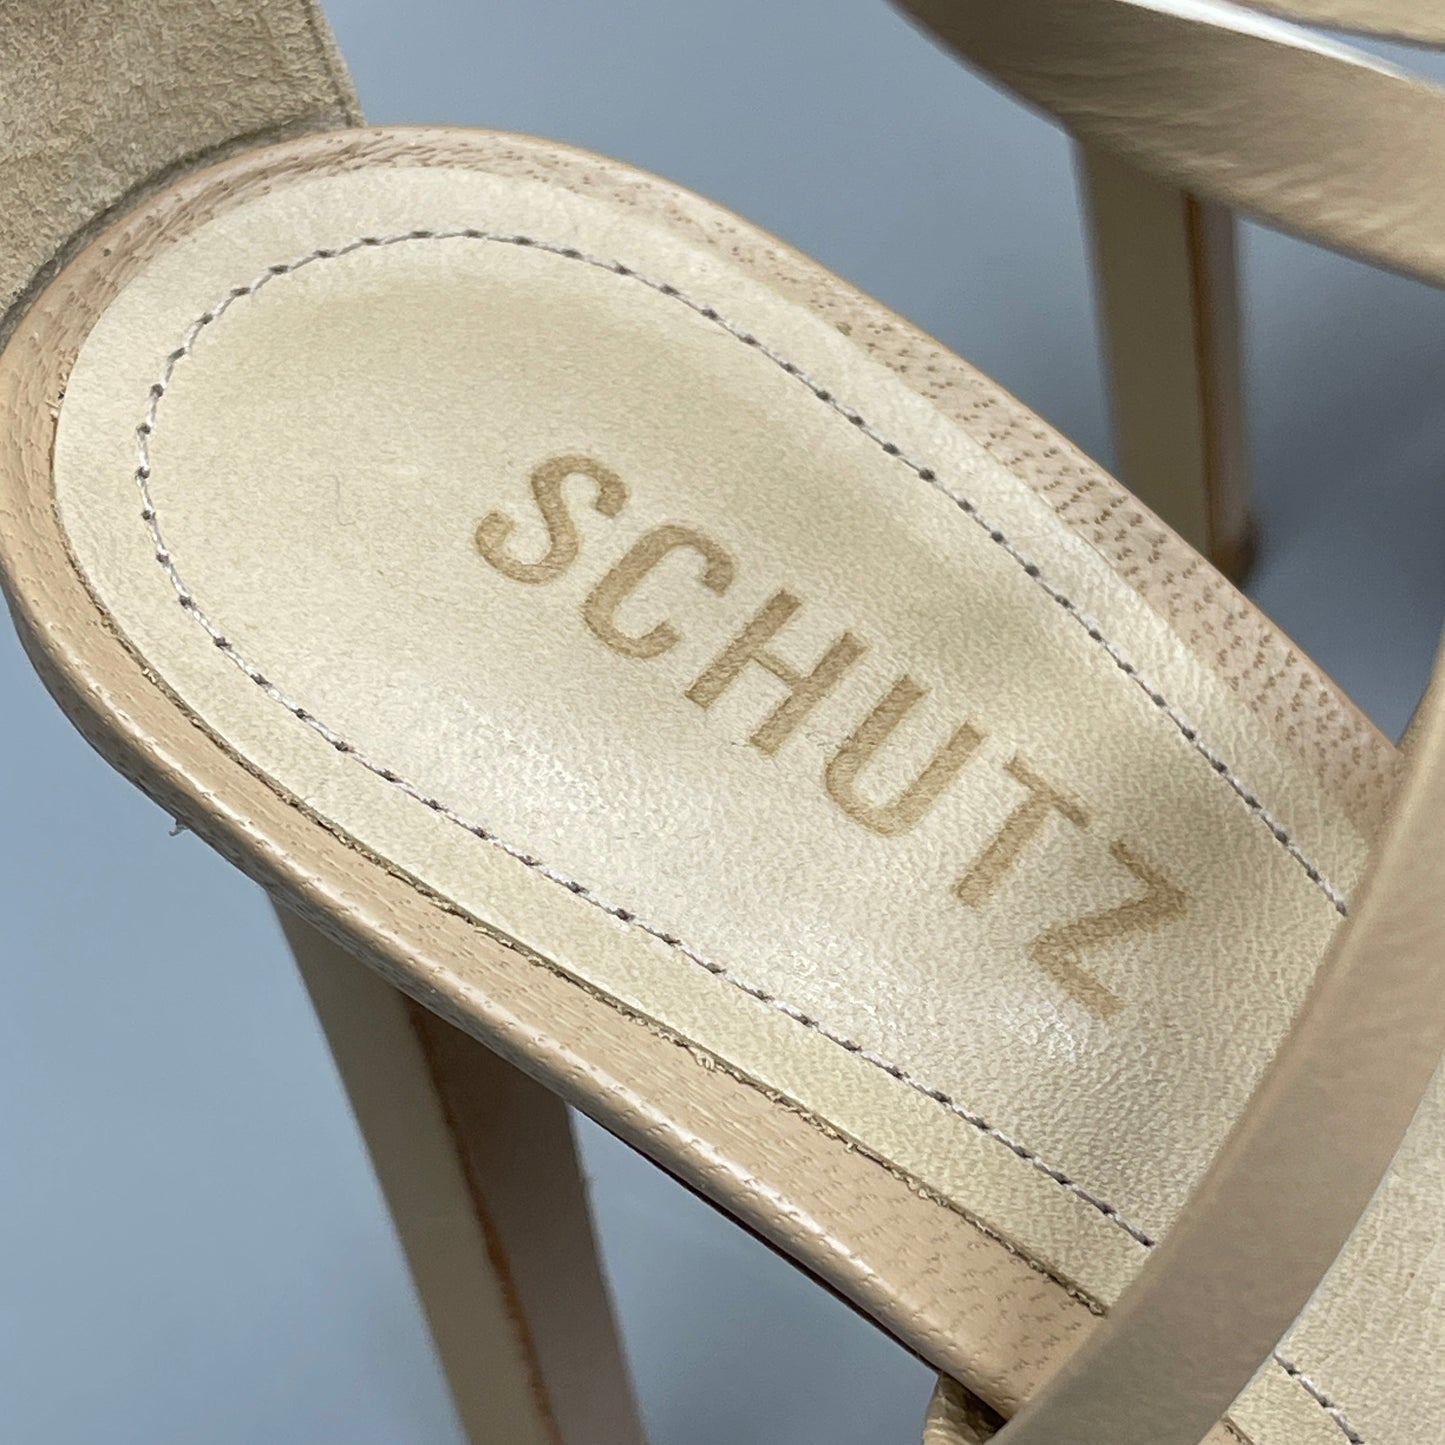 SCHUTZ Bryce Ankle Tie Women's Leather High Heel Strappy Sandal Light Nude Sz 9.5B (New)